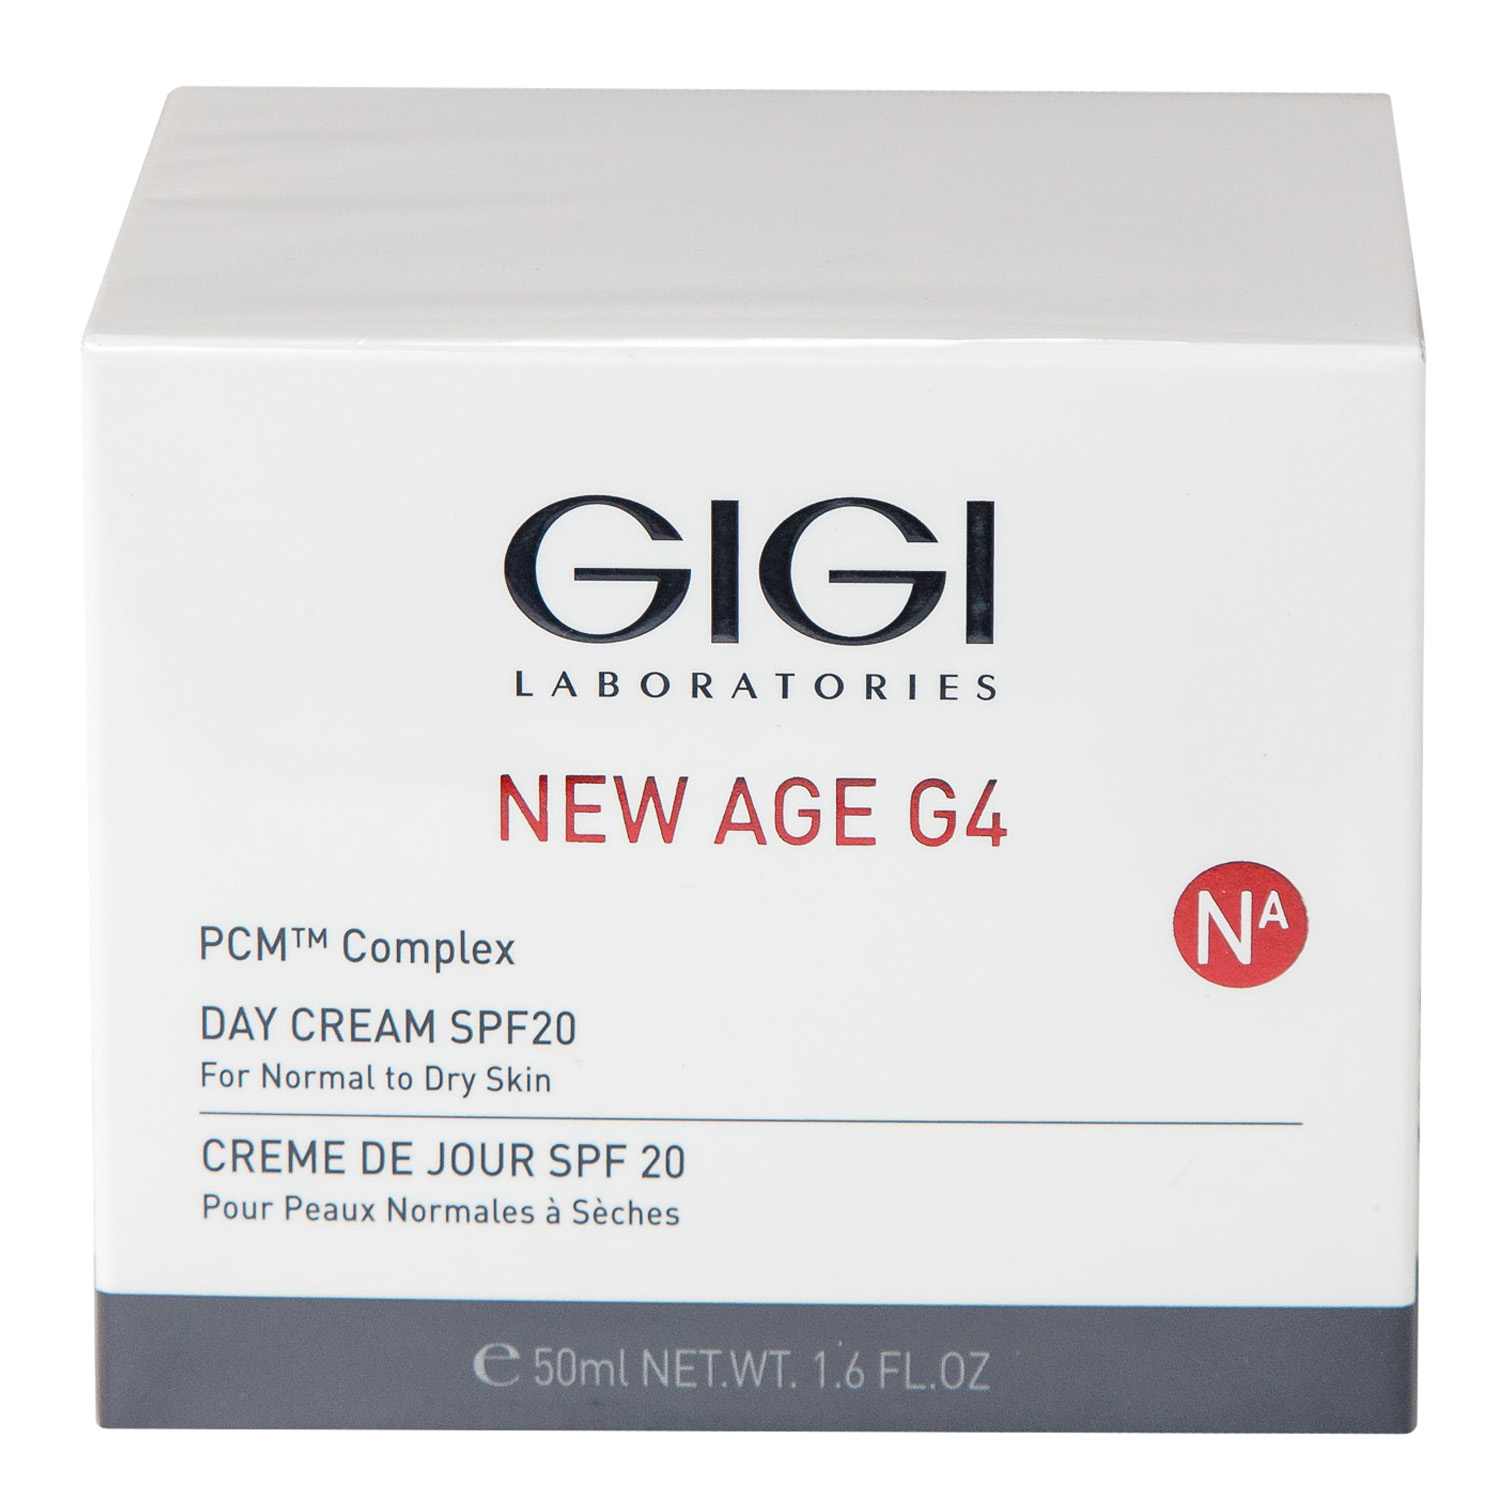 Gigi new age g4. Gigi набор New age g4. New age g4 Gigi 200 мл. Крем для век New age g4 Gigi. Gigi New age g4 дневной крем SPF 20 200мл.